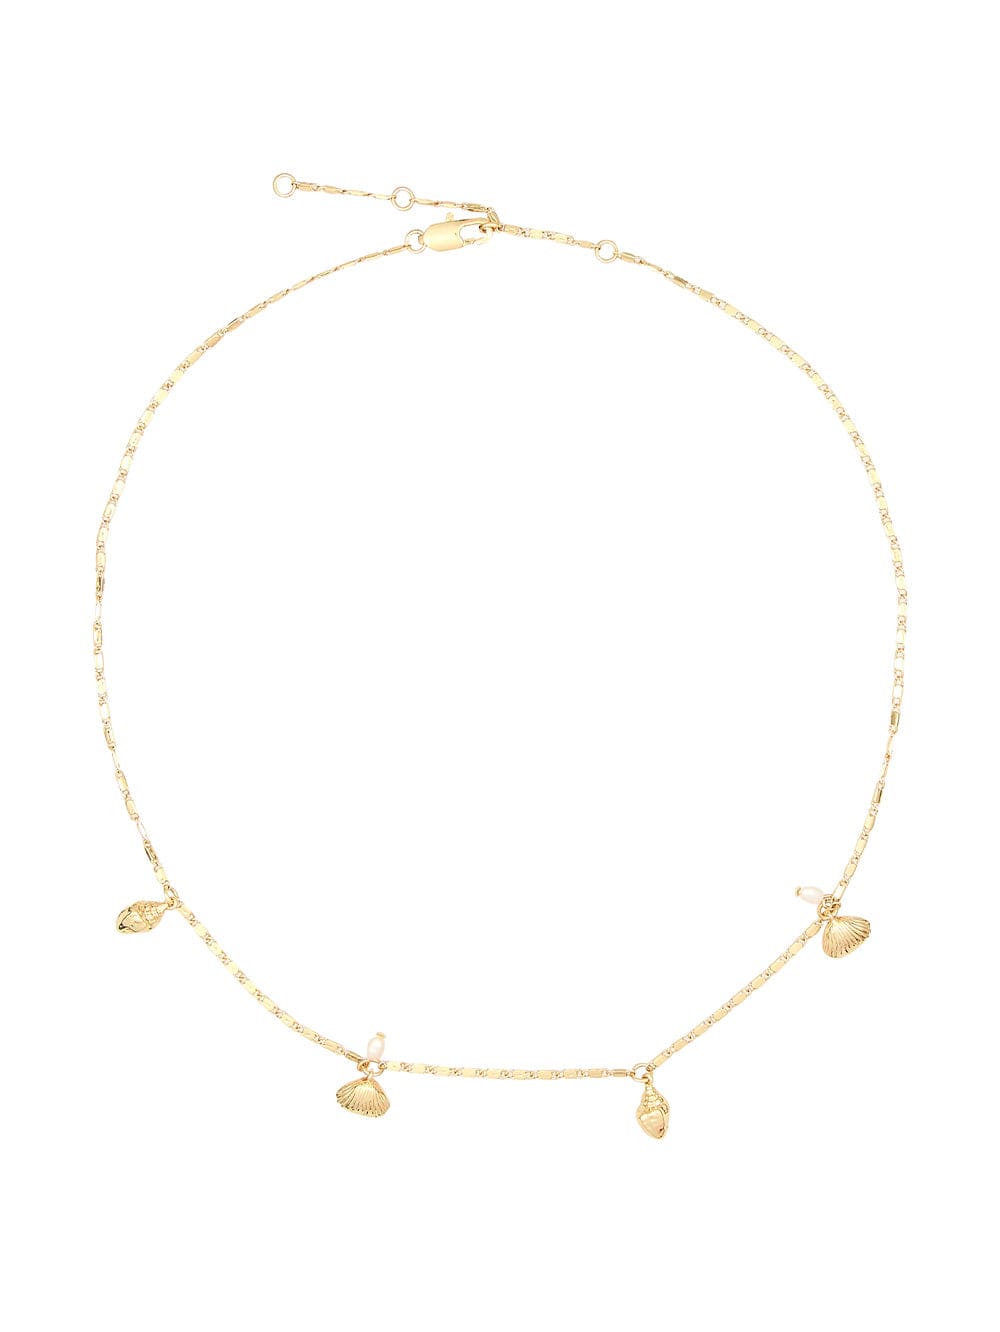 Thalassa Necklace KIVARI - Gold shell studs on gold chain necklace